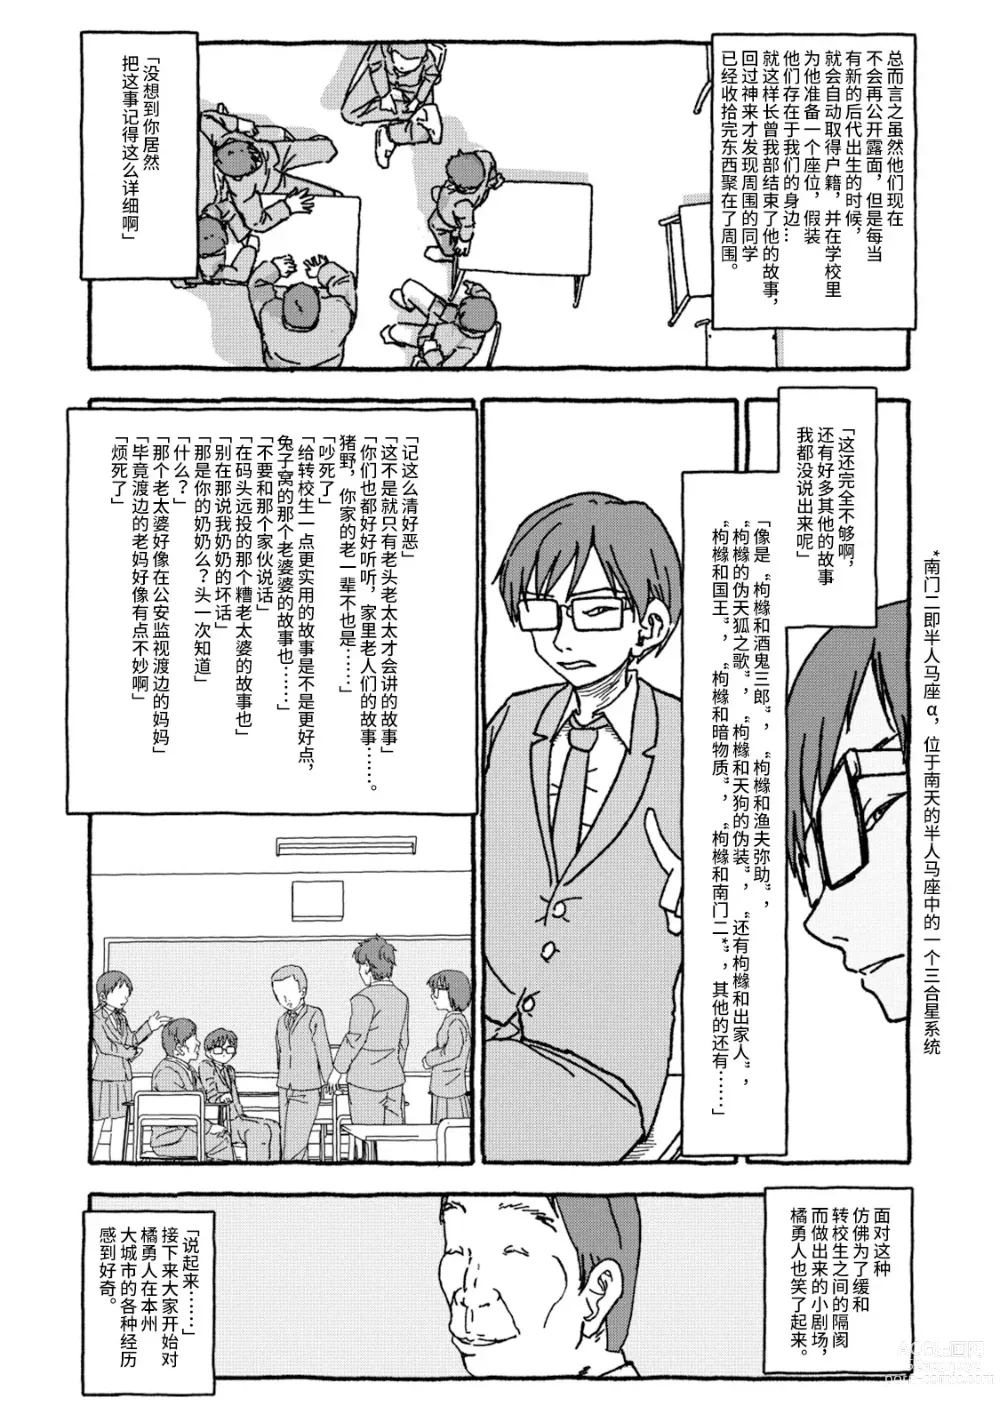 Page 23 of doujinshi 相遇四光年后合体 前篇